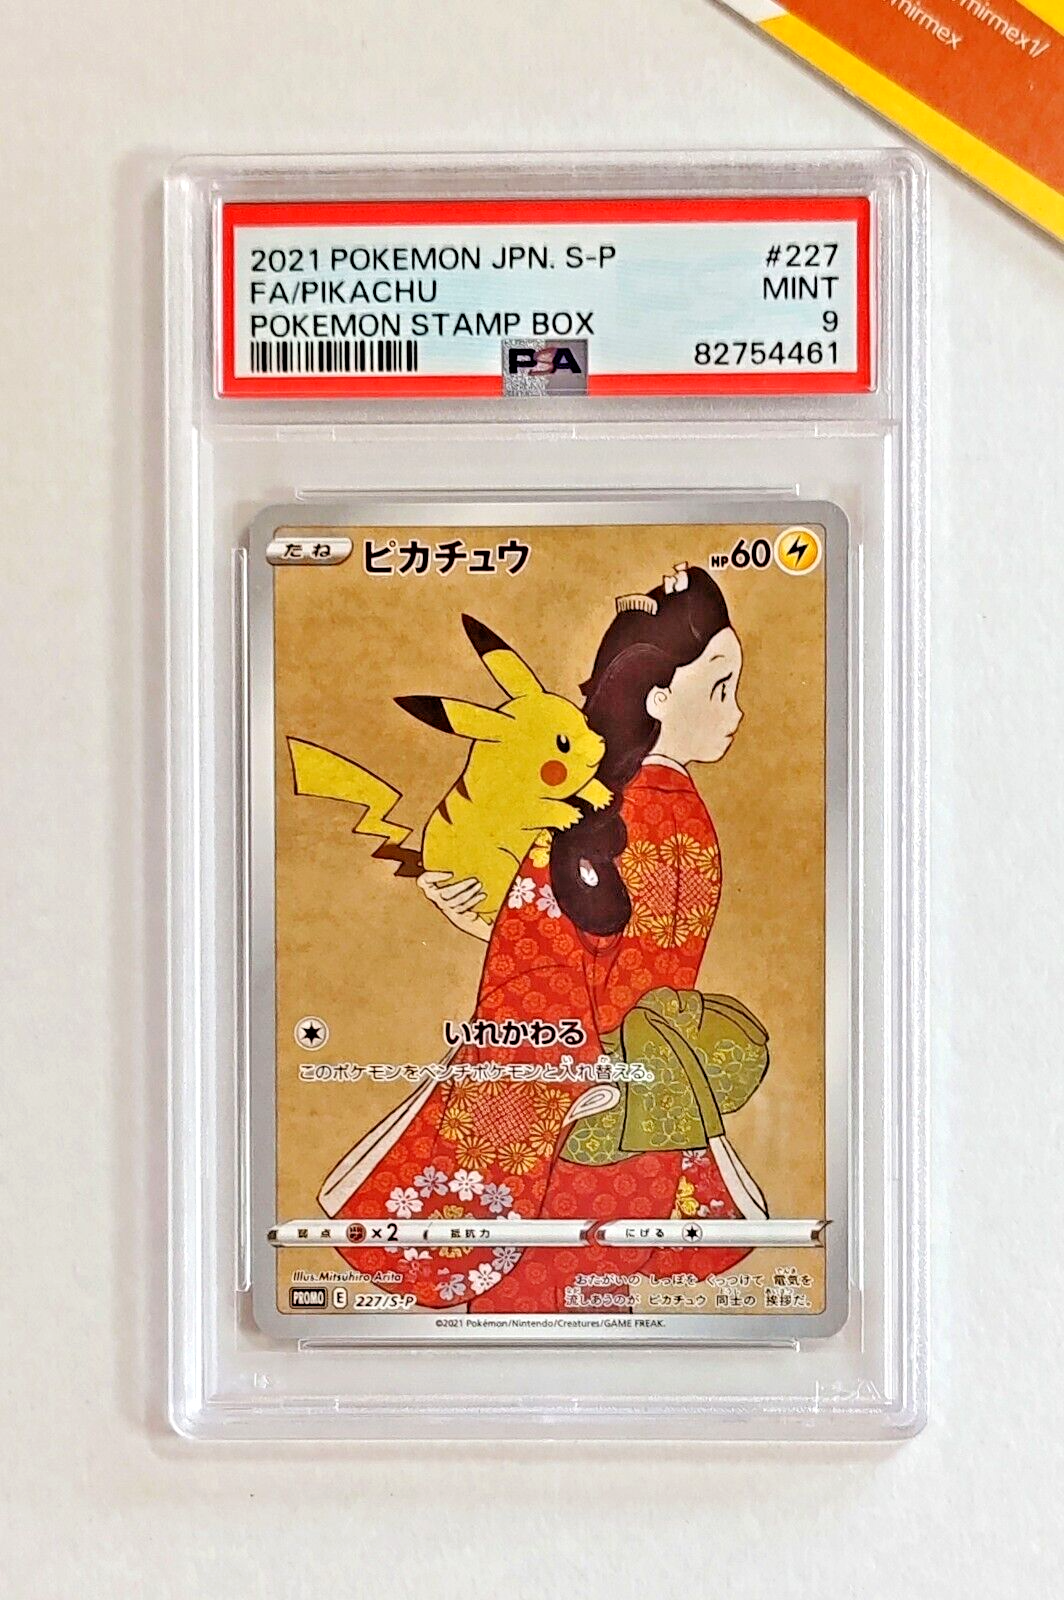 Pokemon PSA 9 Pikachu 227SP Full Art Pokemon Stamp Box 2021 Japanese J